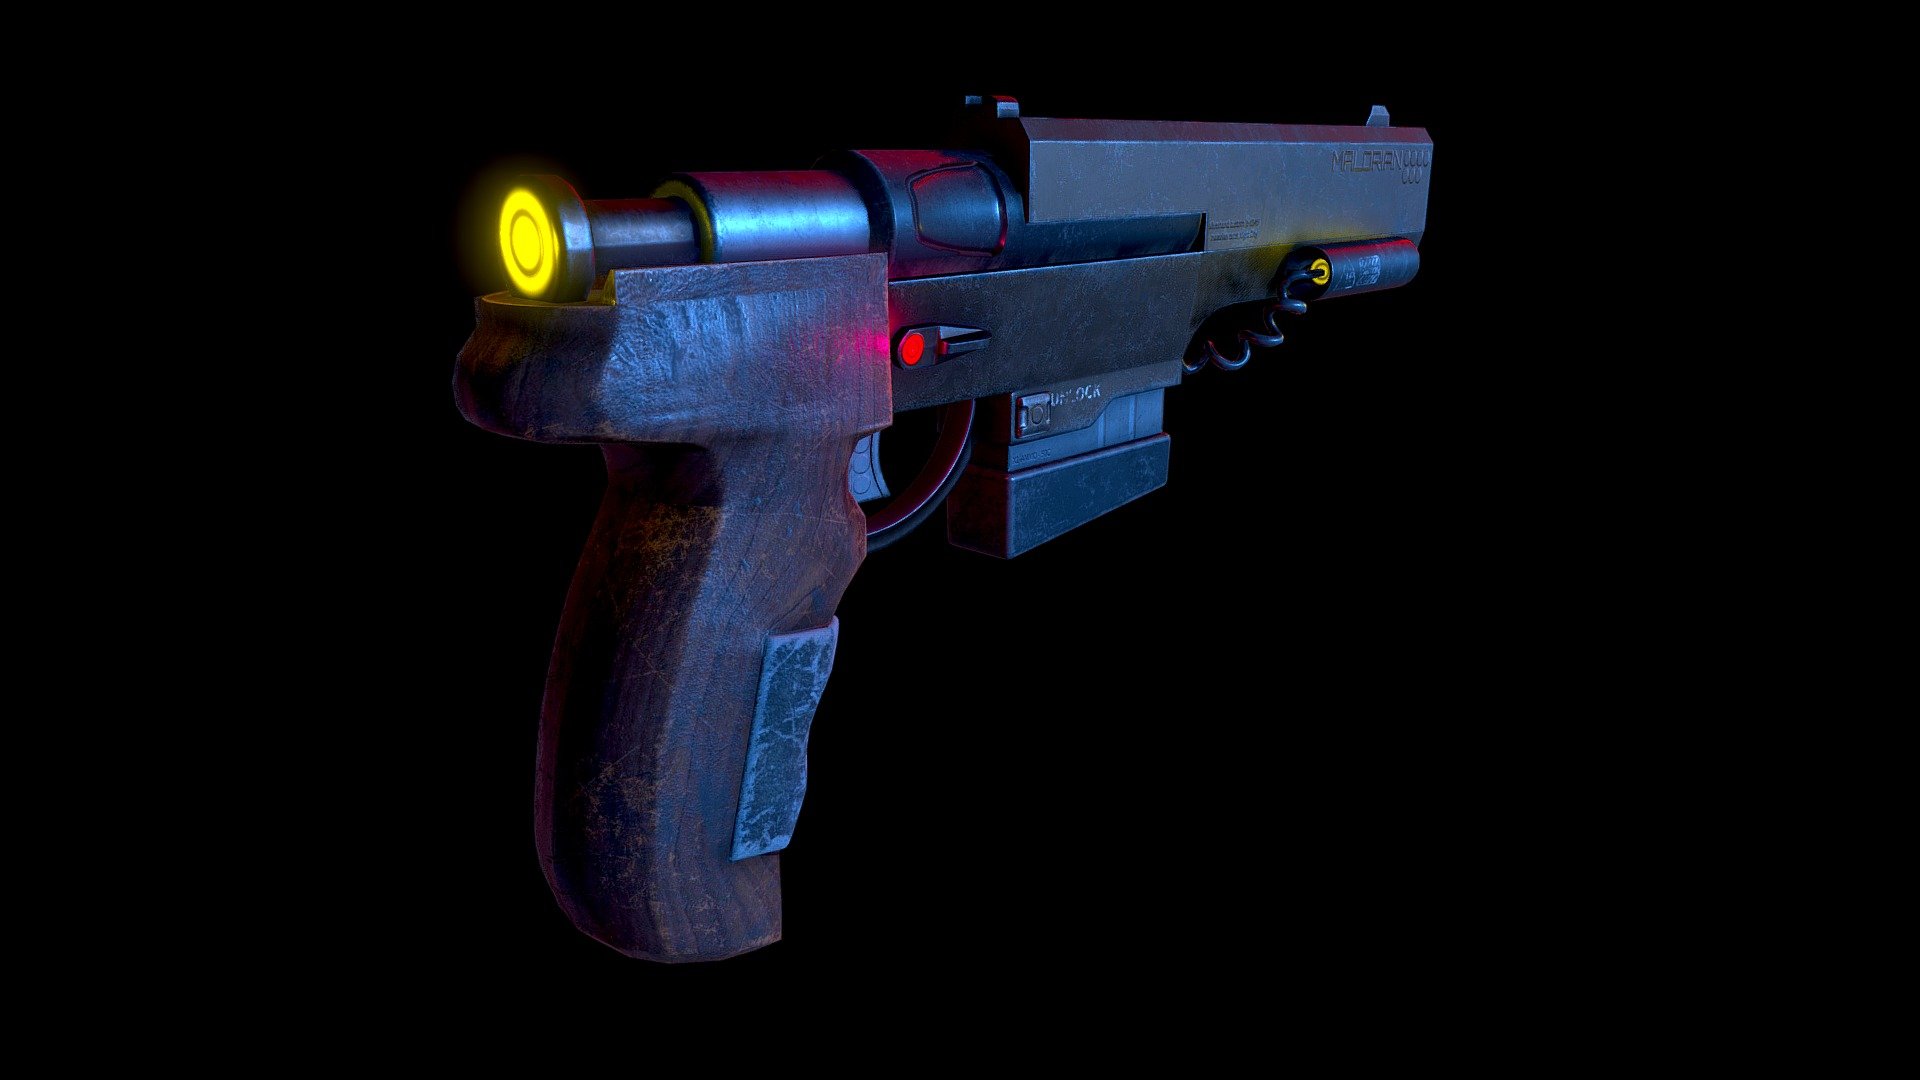 MALORIAN ARMS 2077 [ CyberPunk Gun ]

-Shooting Animation Included - MALORIAN ARMS 2077 [ CyberPunk Gun ] - Buy Royalty Free 3D model by Handrews3D 3d model